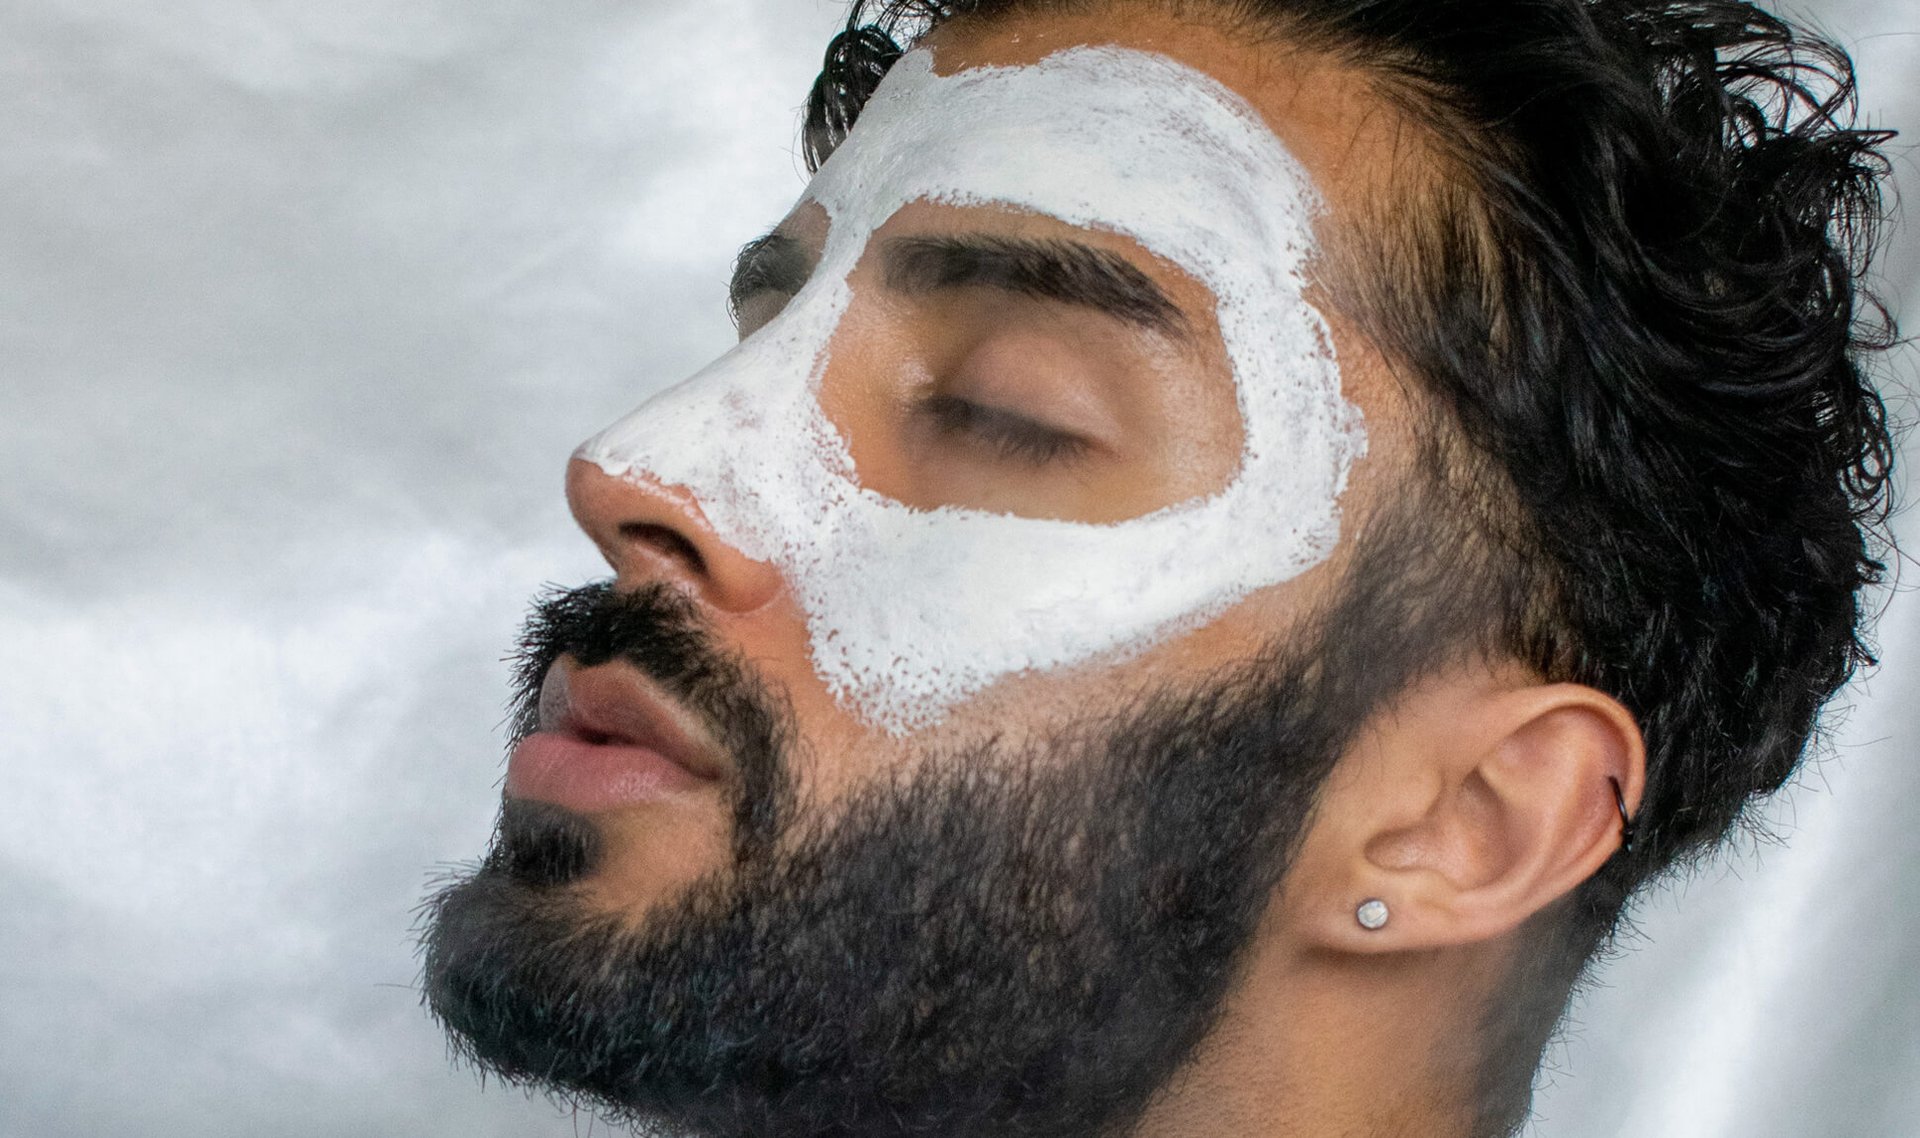 Saq Idrees with skin cream on face